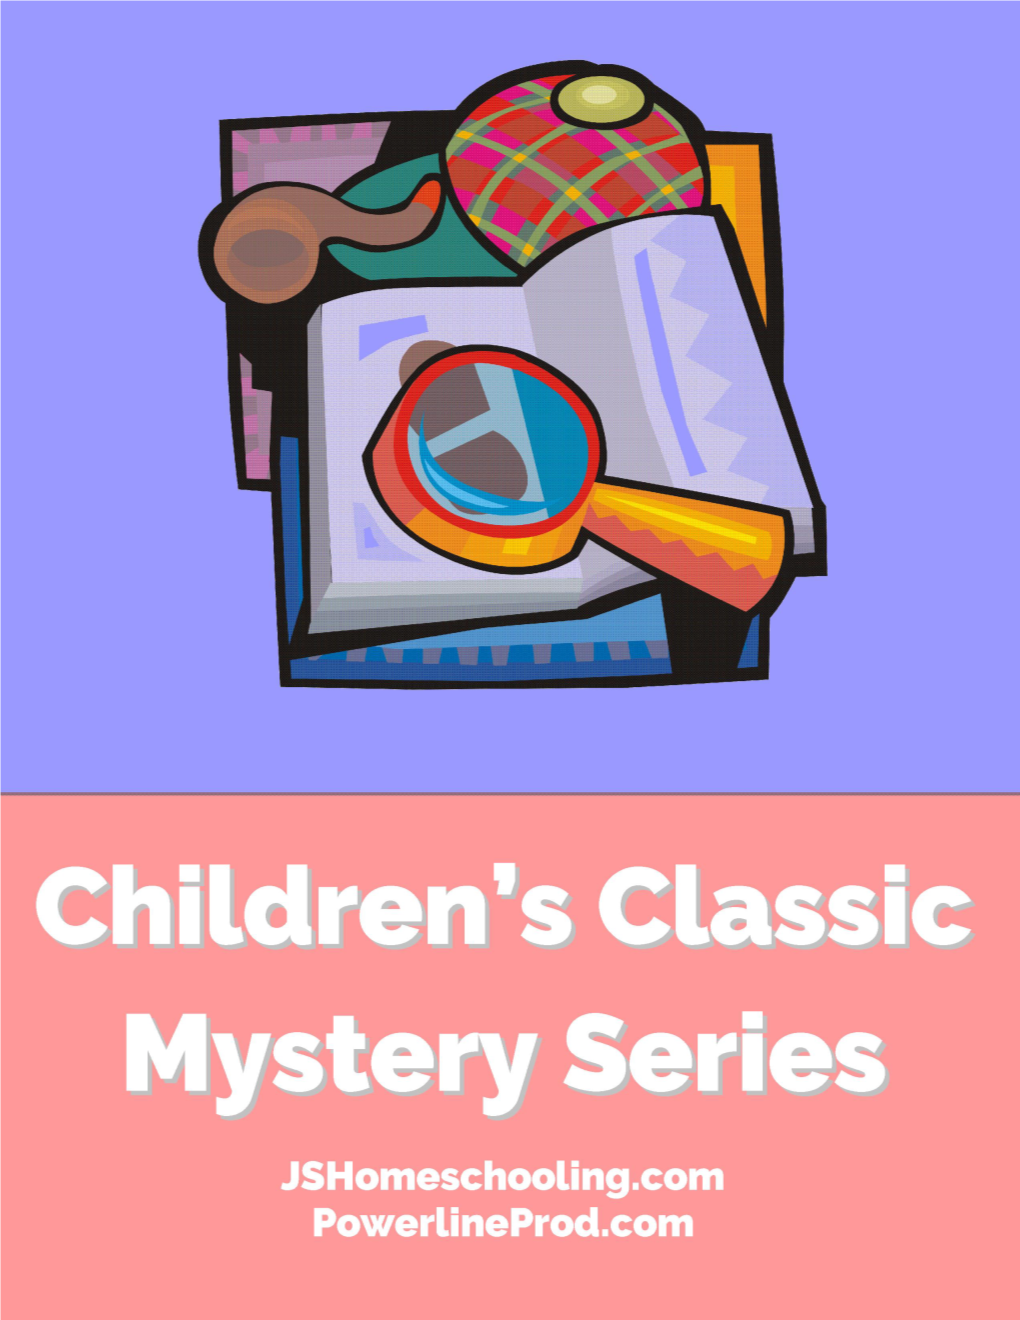 Children's Classic Mystery Series